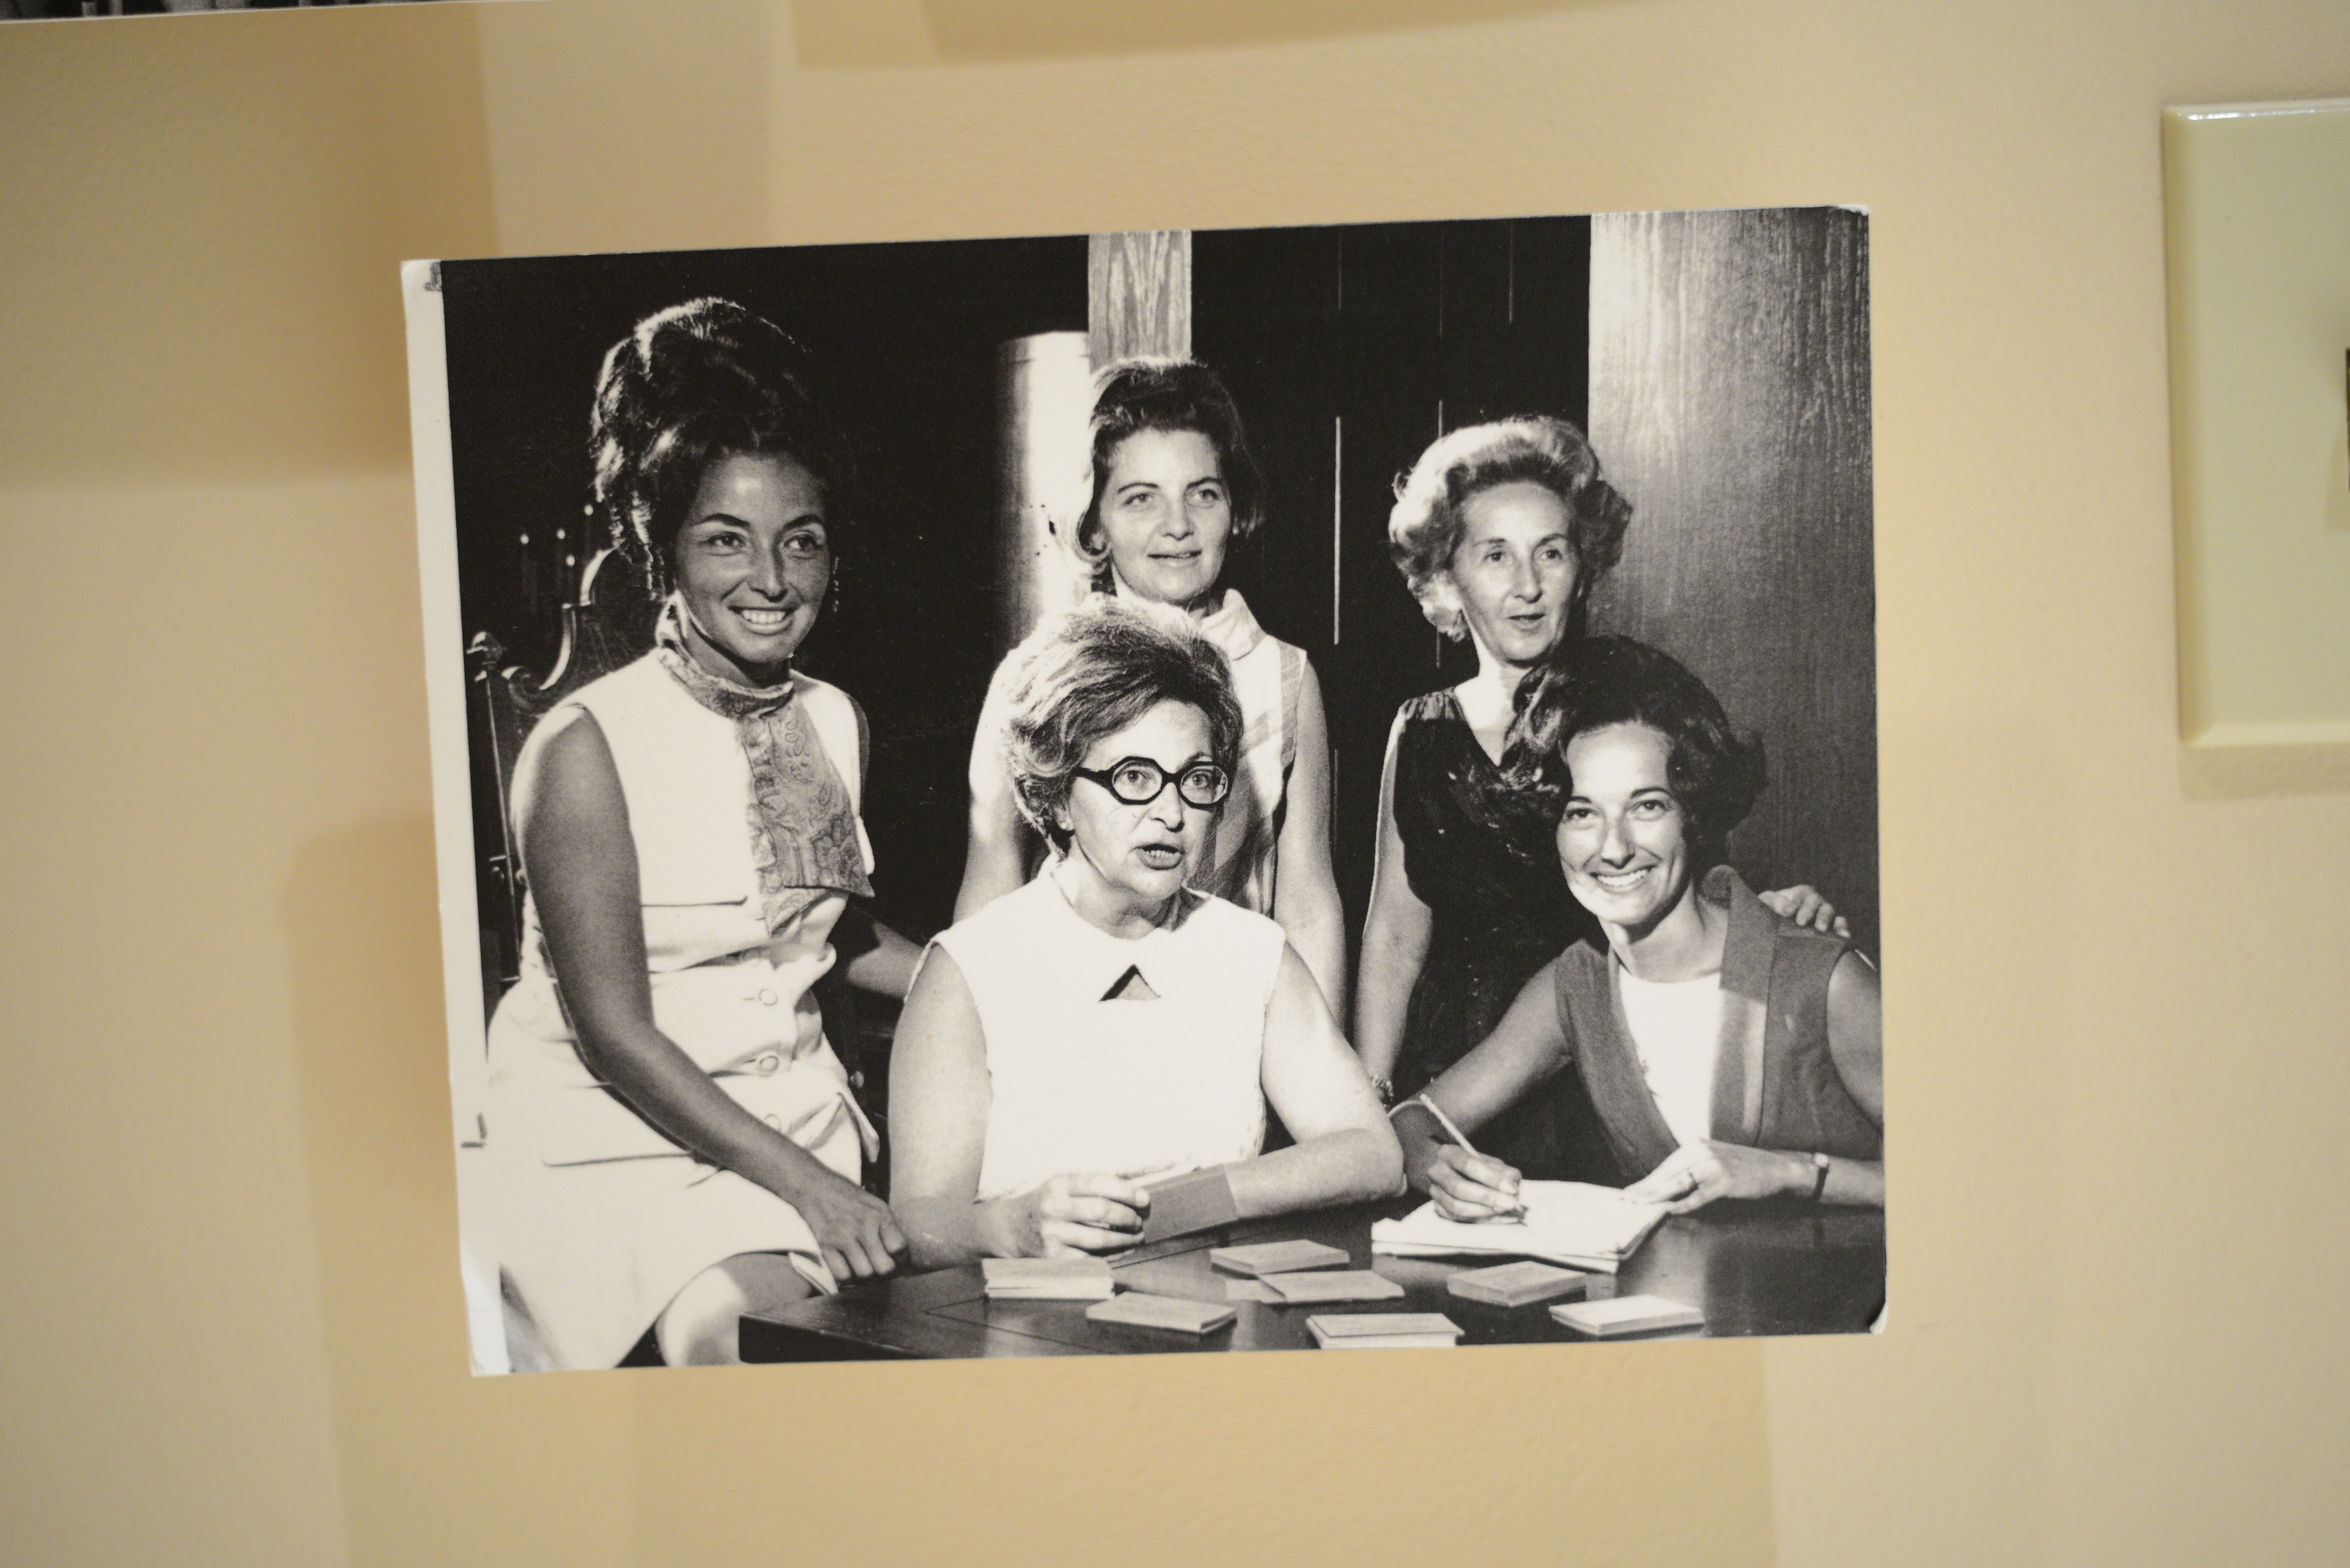 Photograph of five women, including Susan Molasky